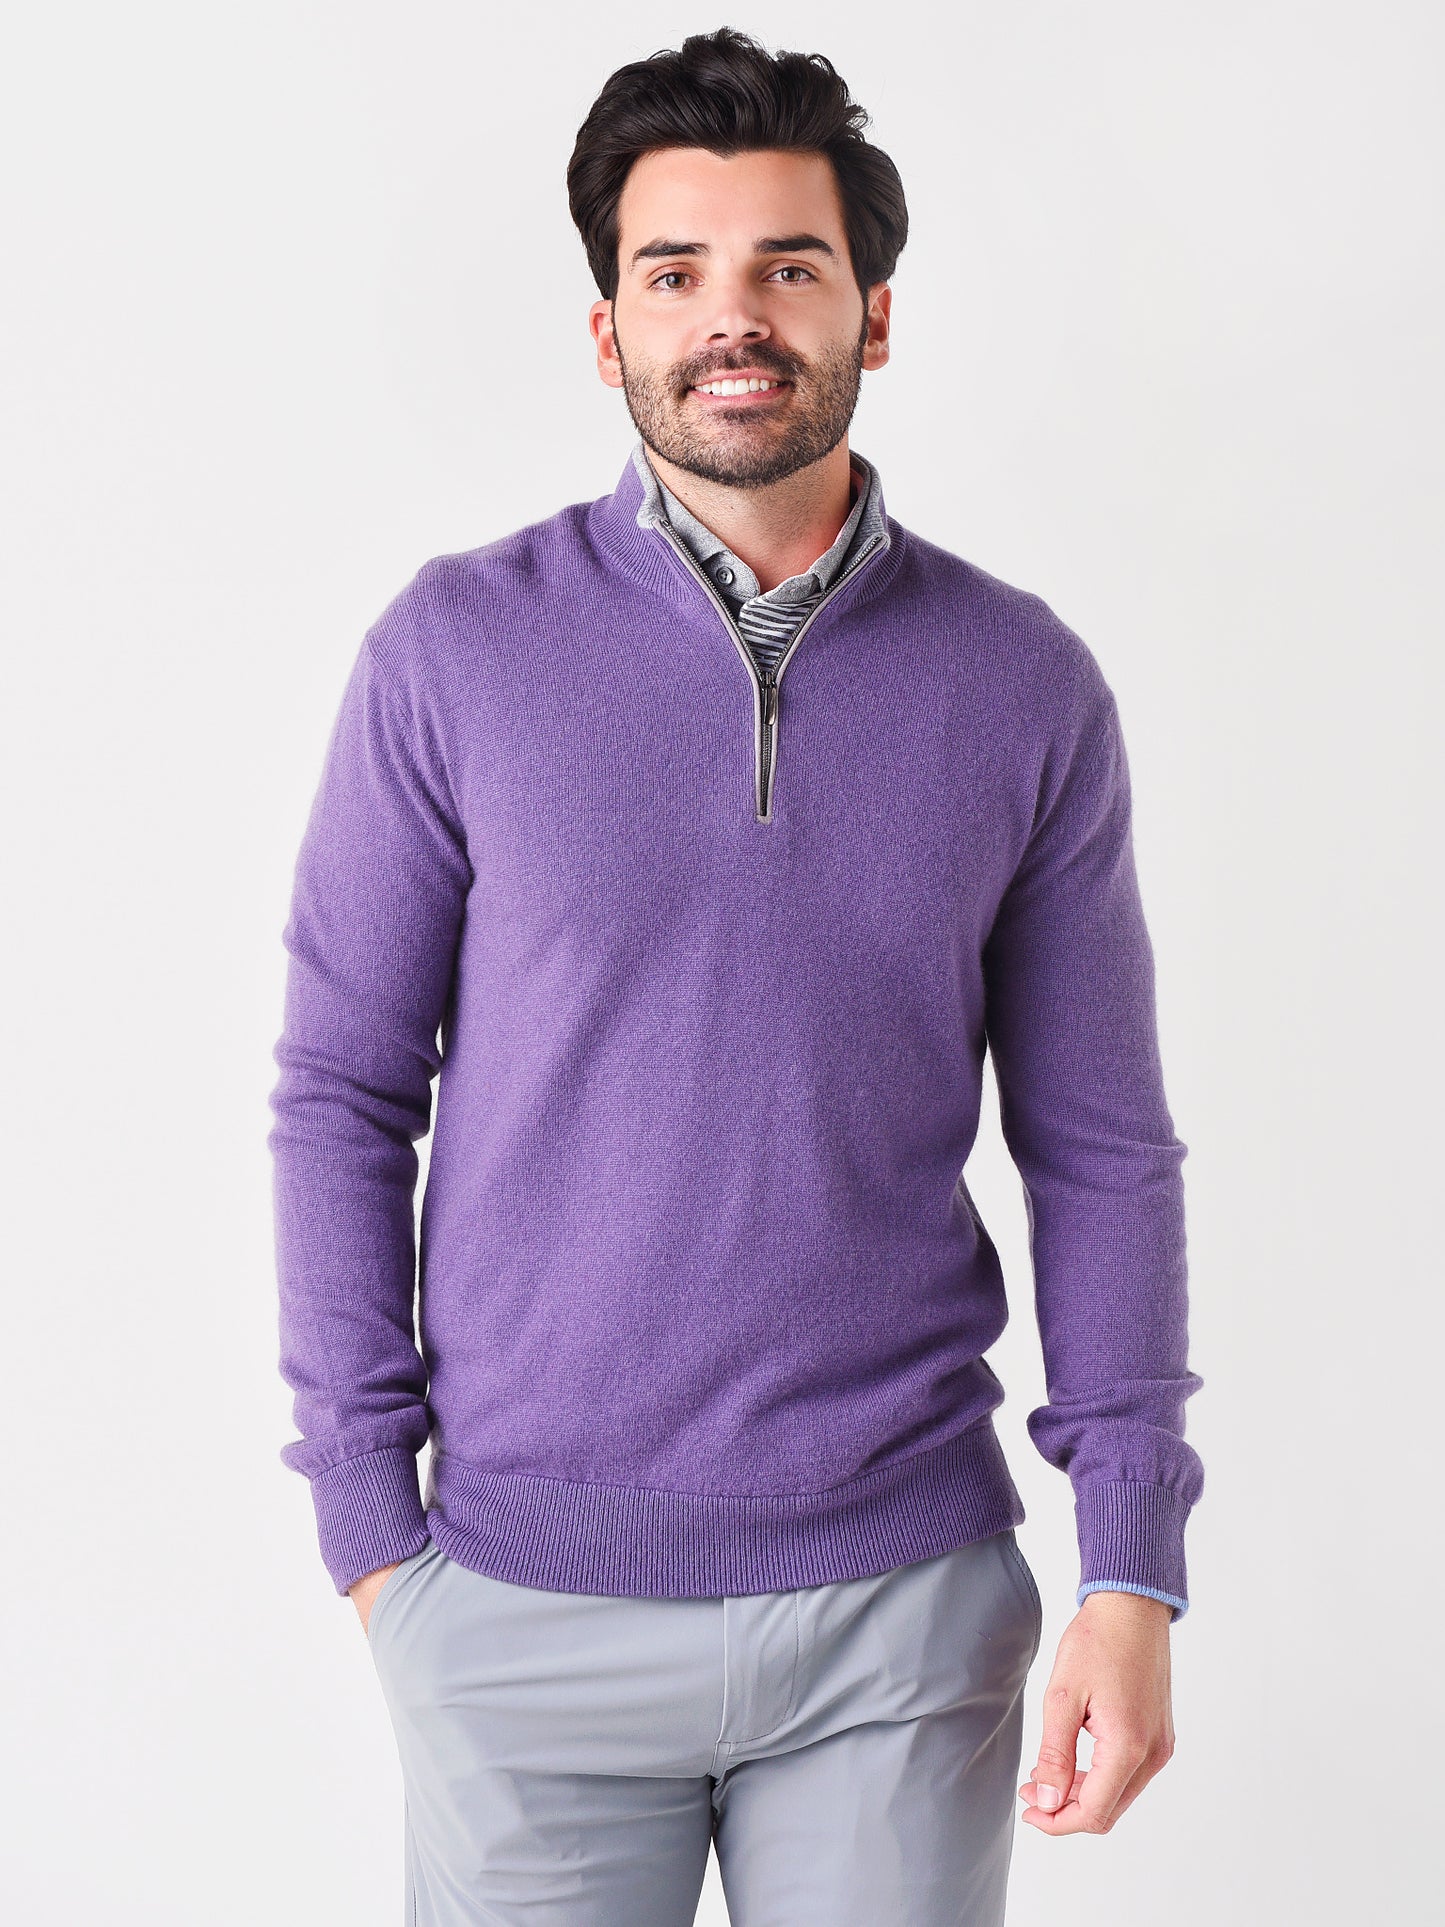 Greyson Men's Sebonack Quarter-Zip Golf Sweater